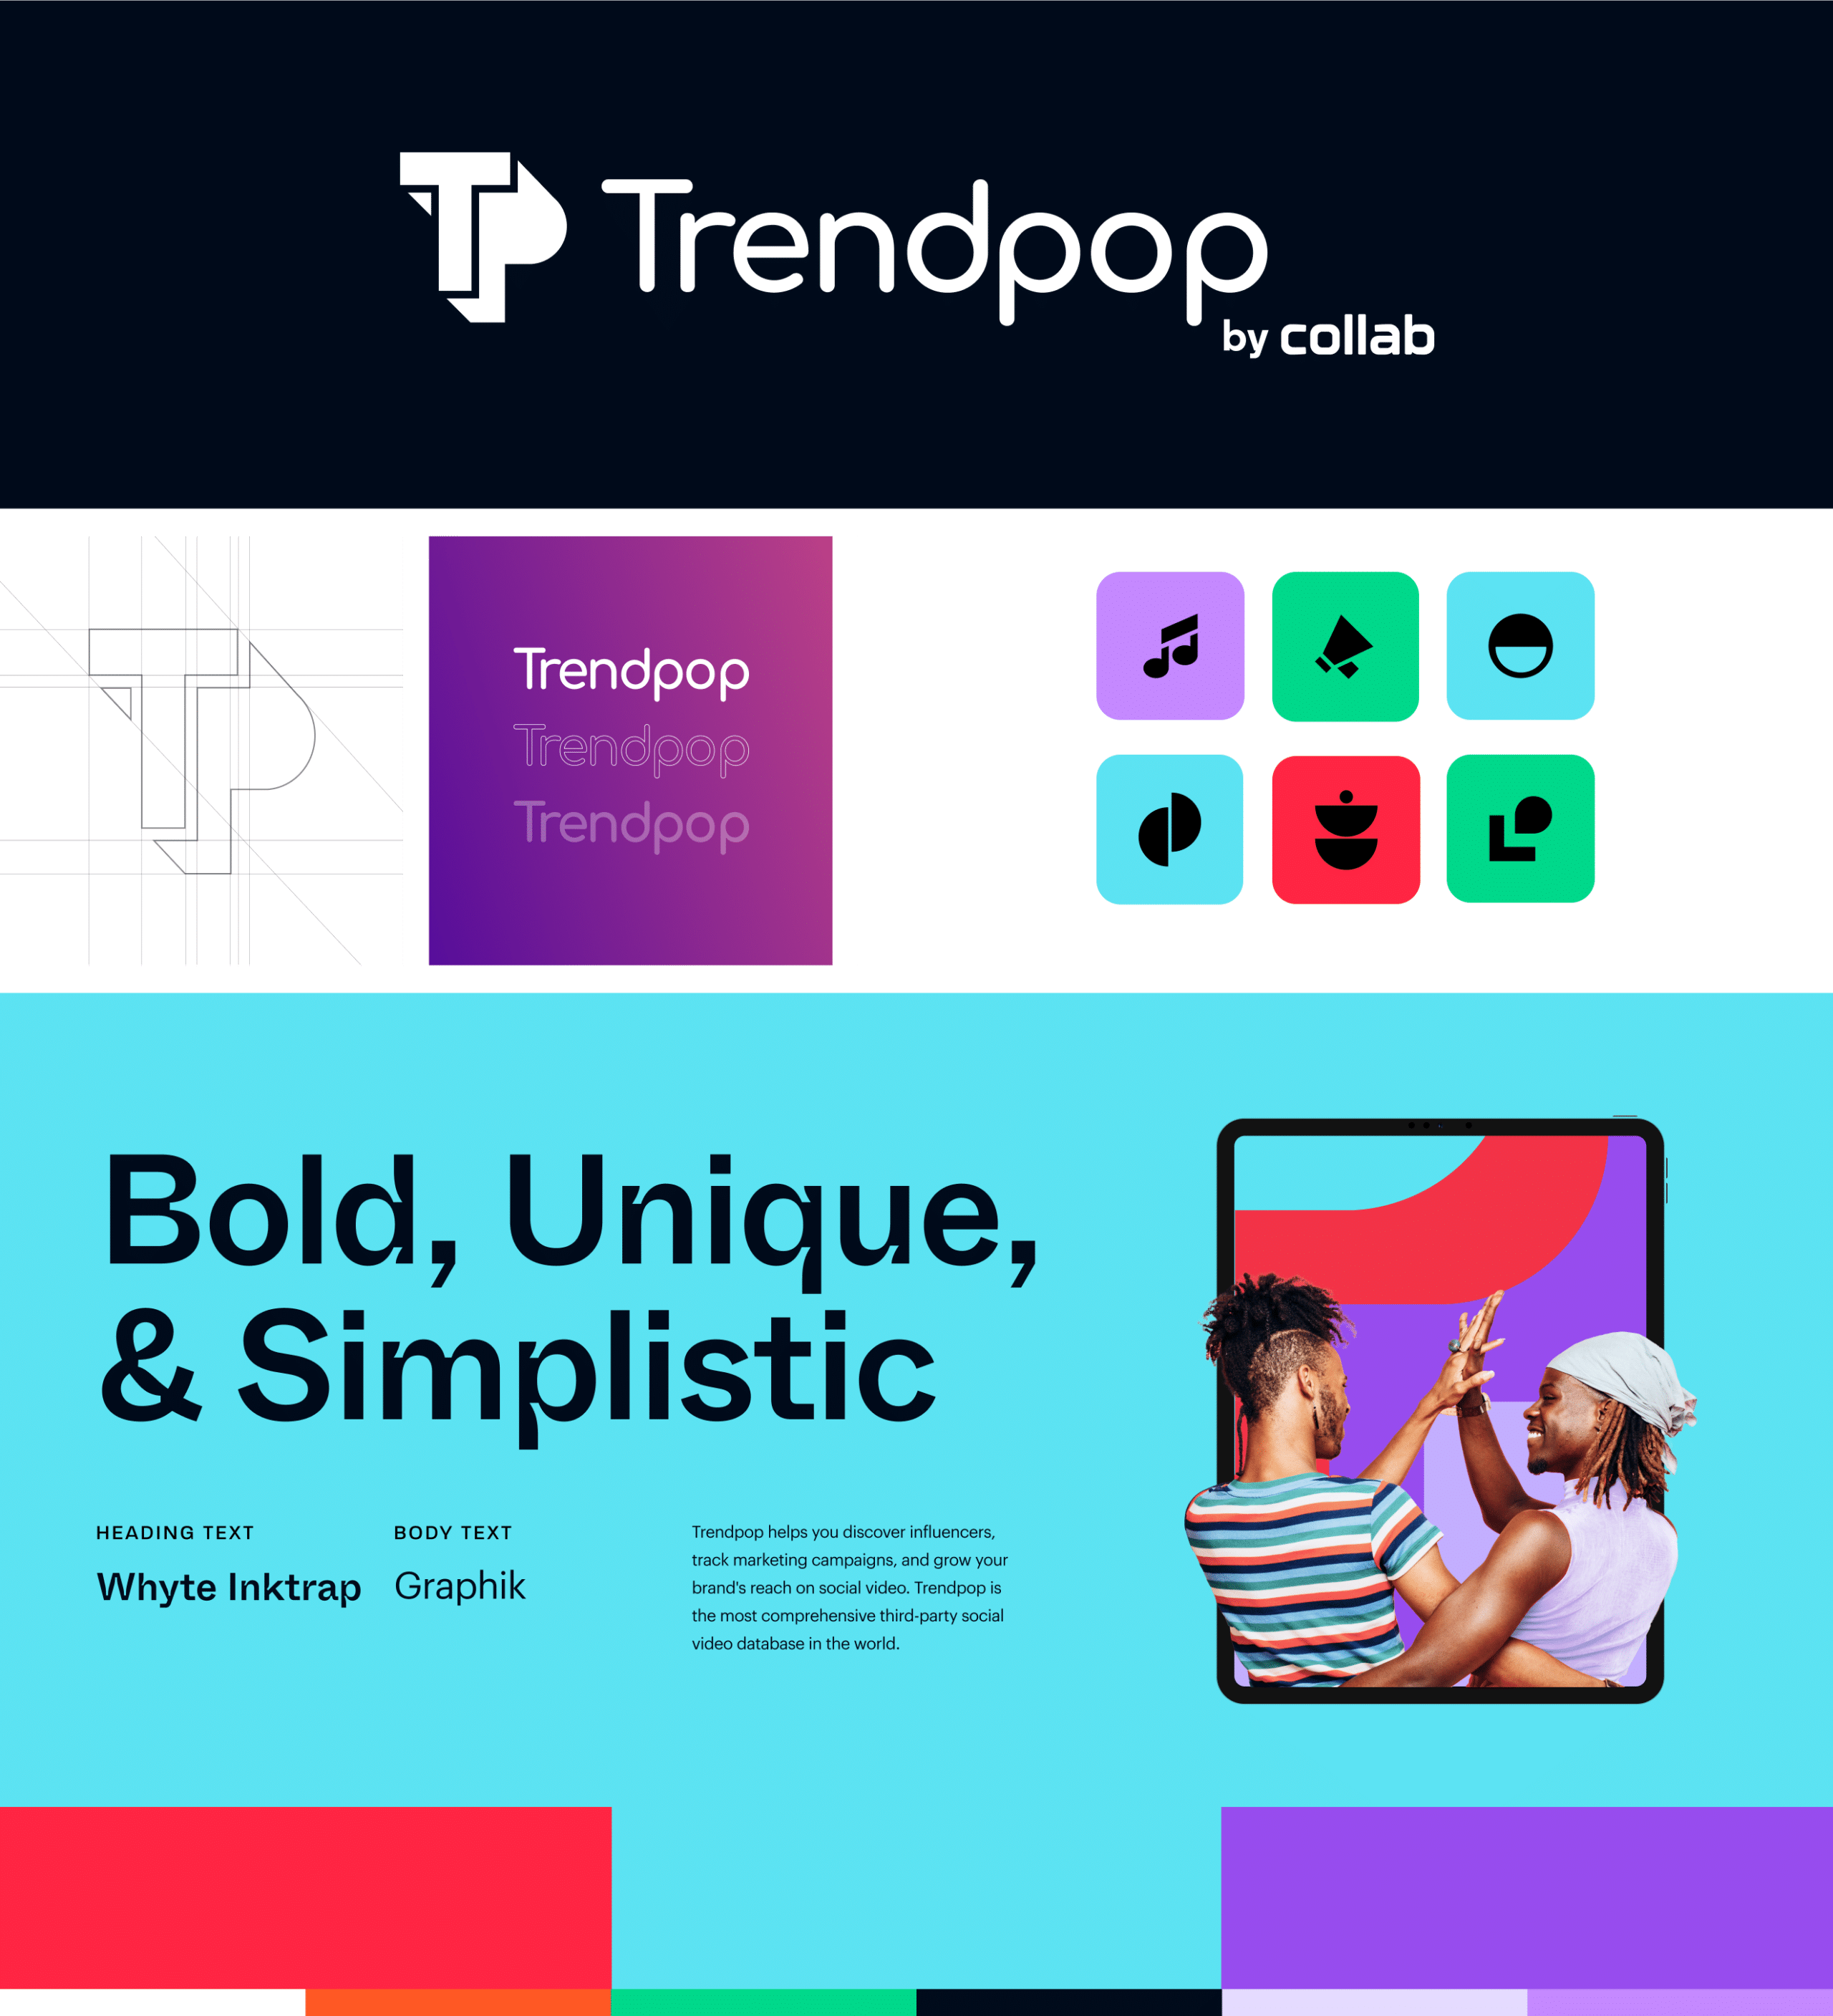 Trendpop visual language thumbnail